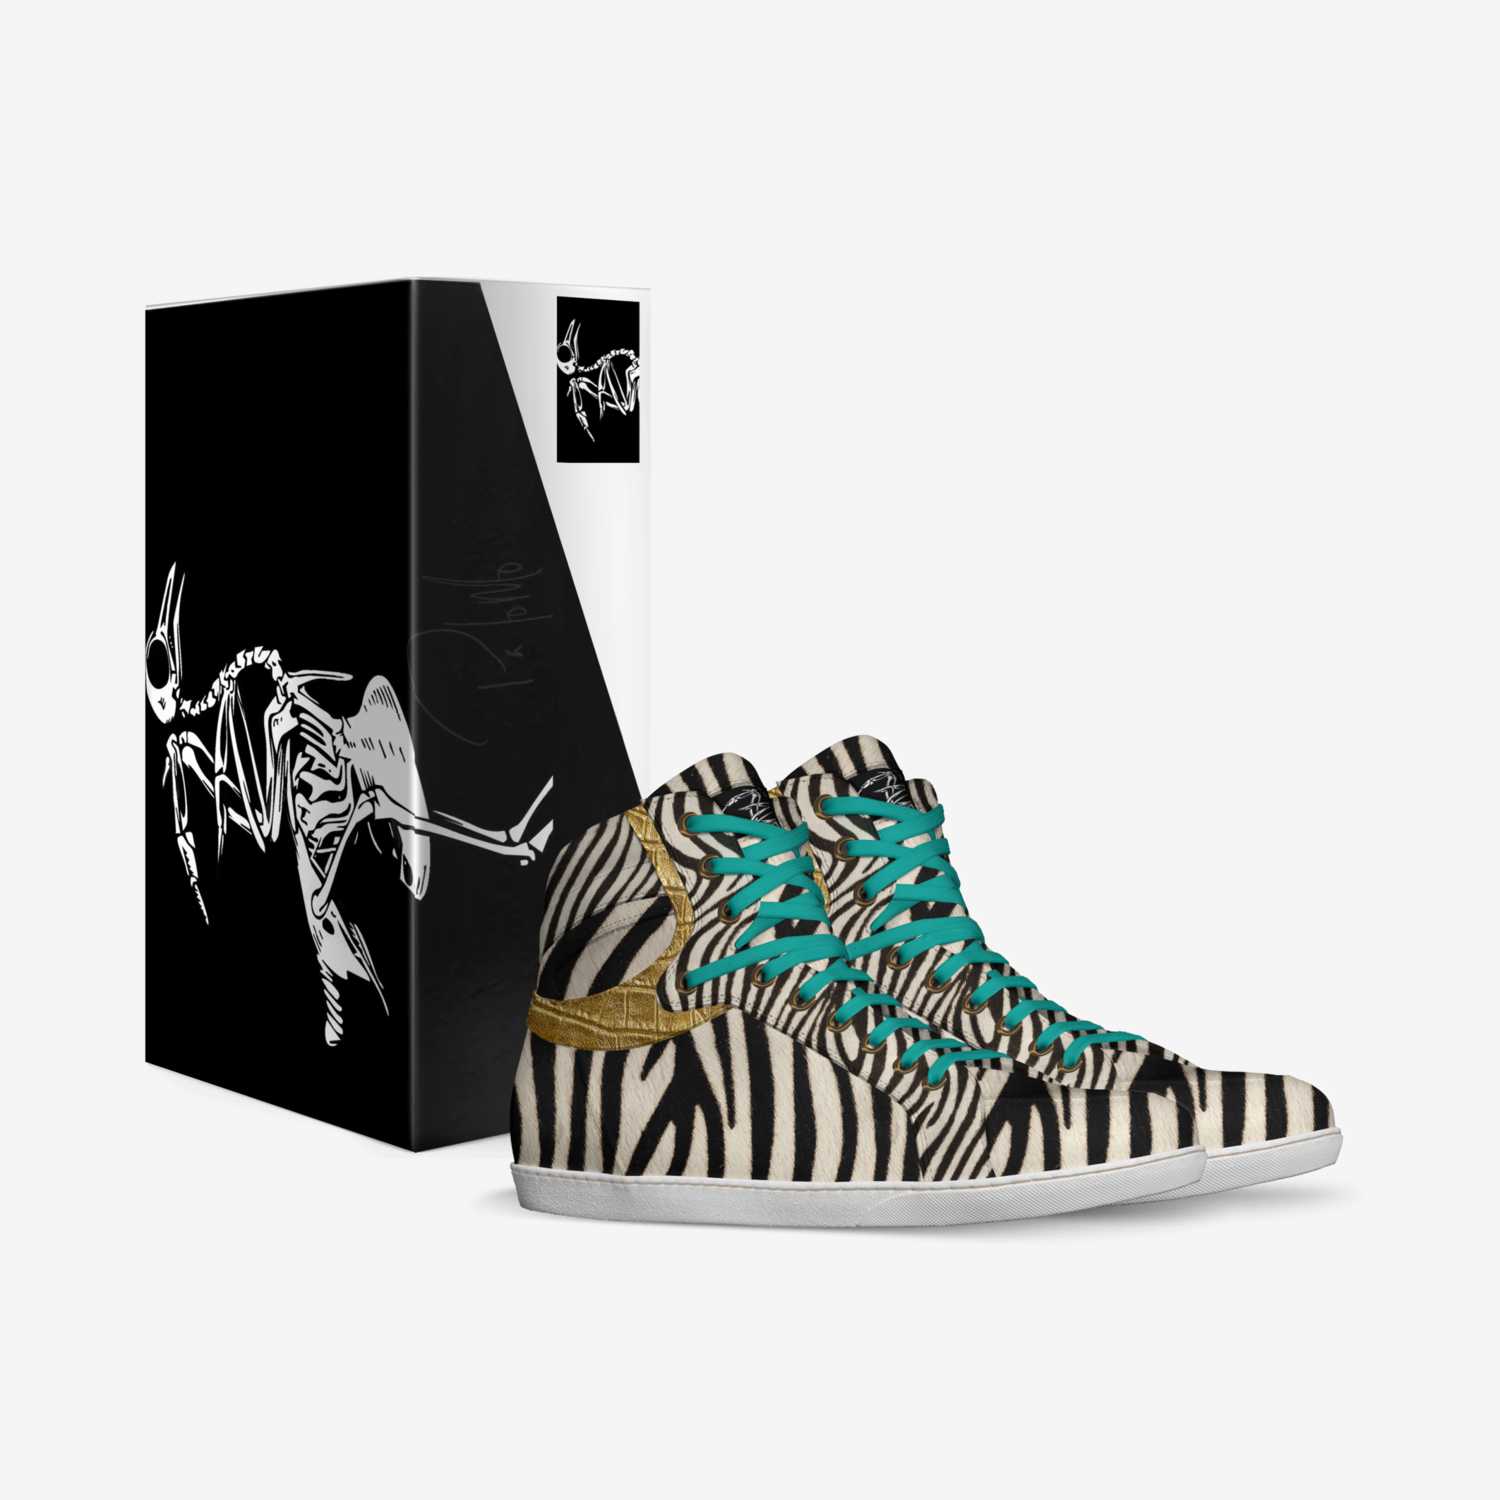 LaPalomoS custom made in Italy shoes by Palomo Haywood | Box view